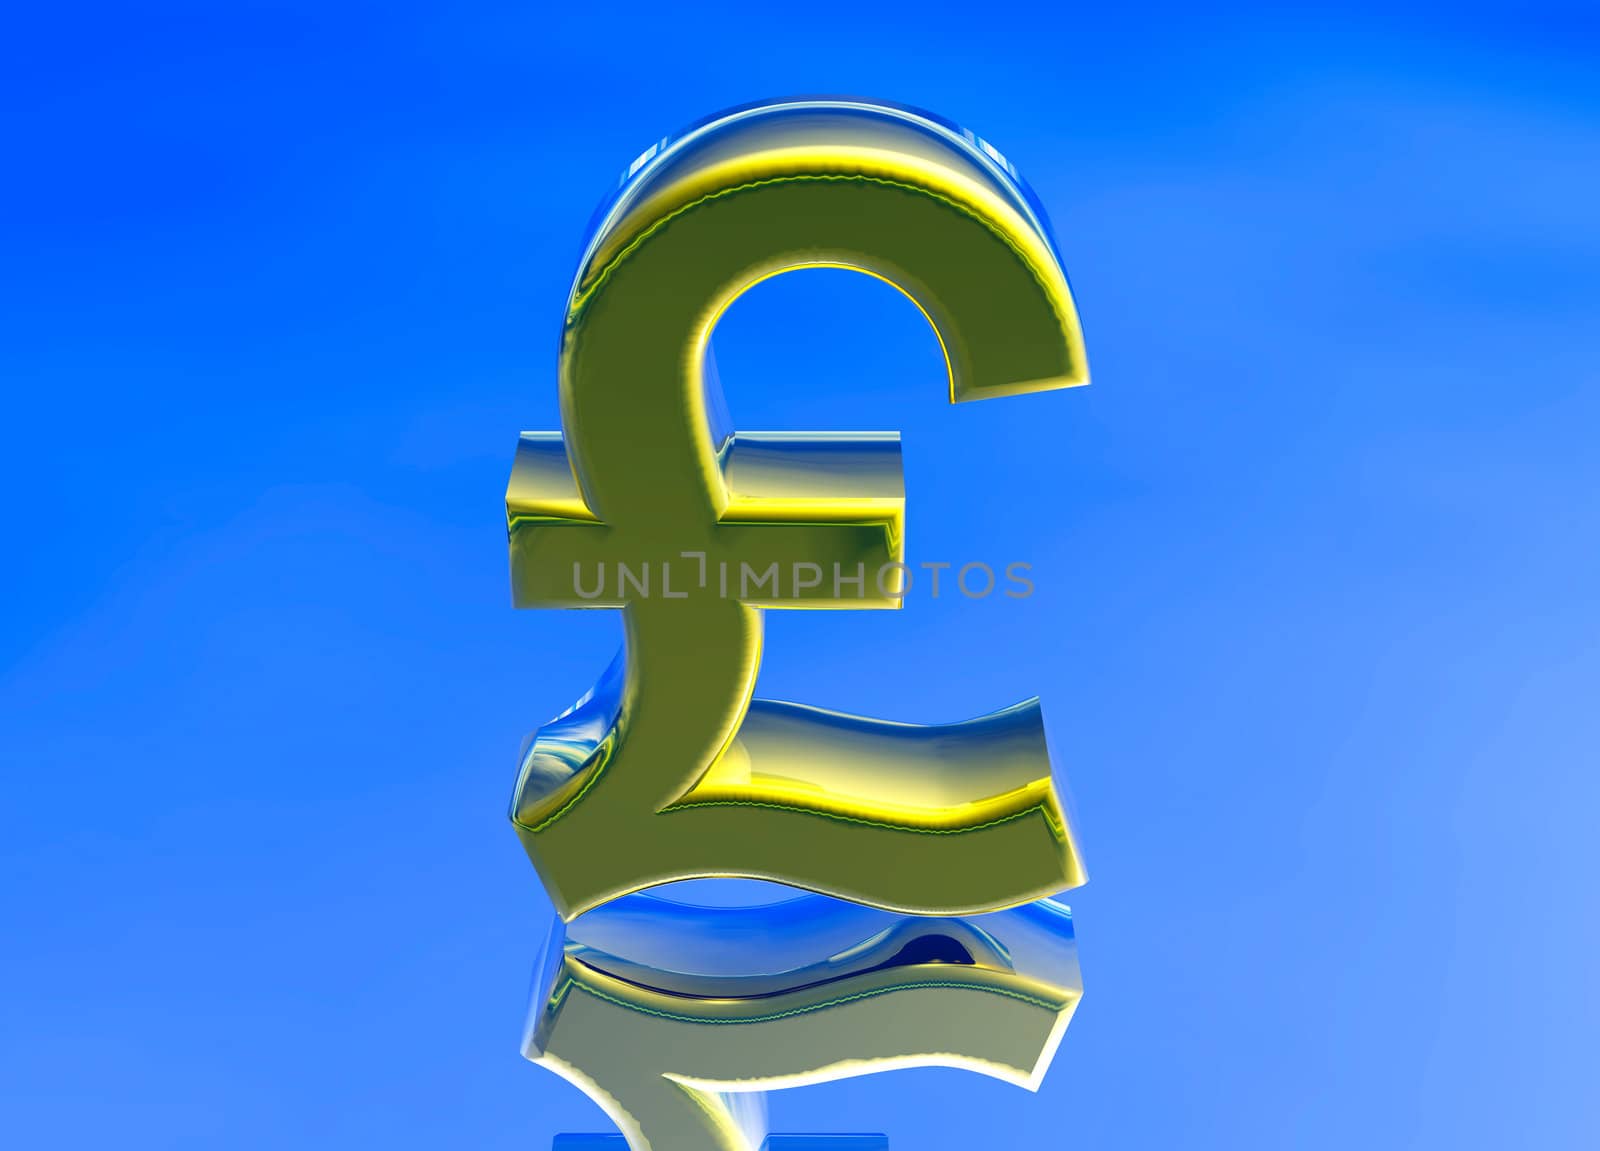 Gold UK GBP Pound Sterling Currency Symbol on Blue Background